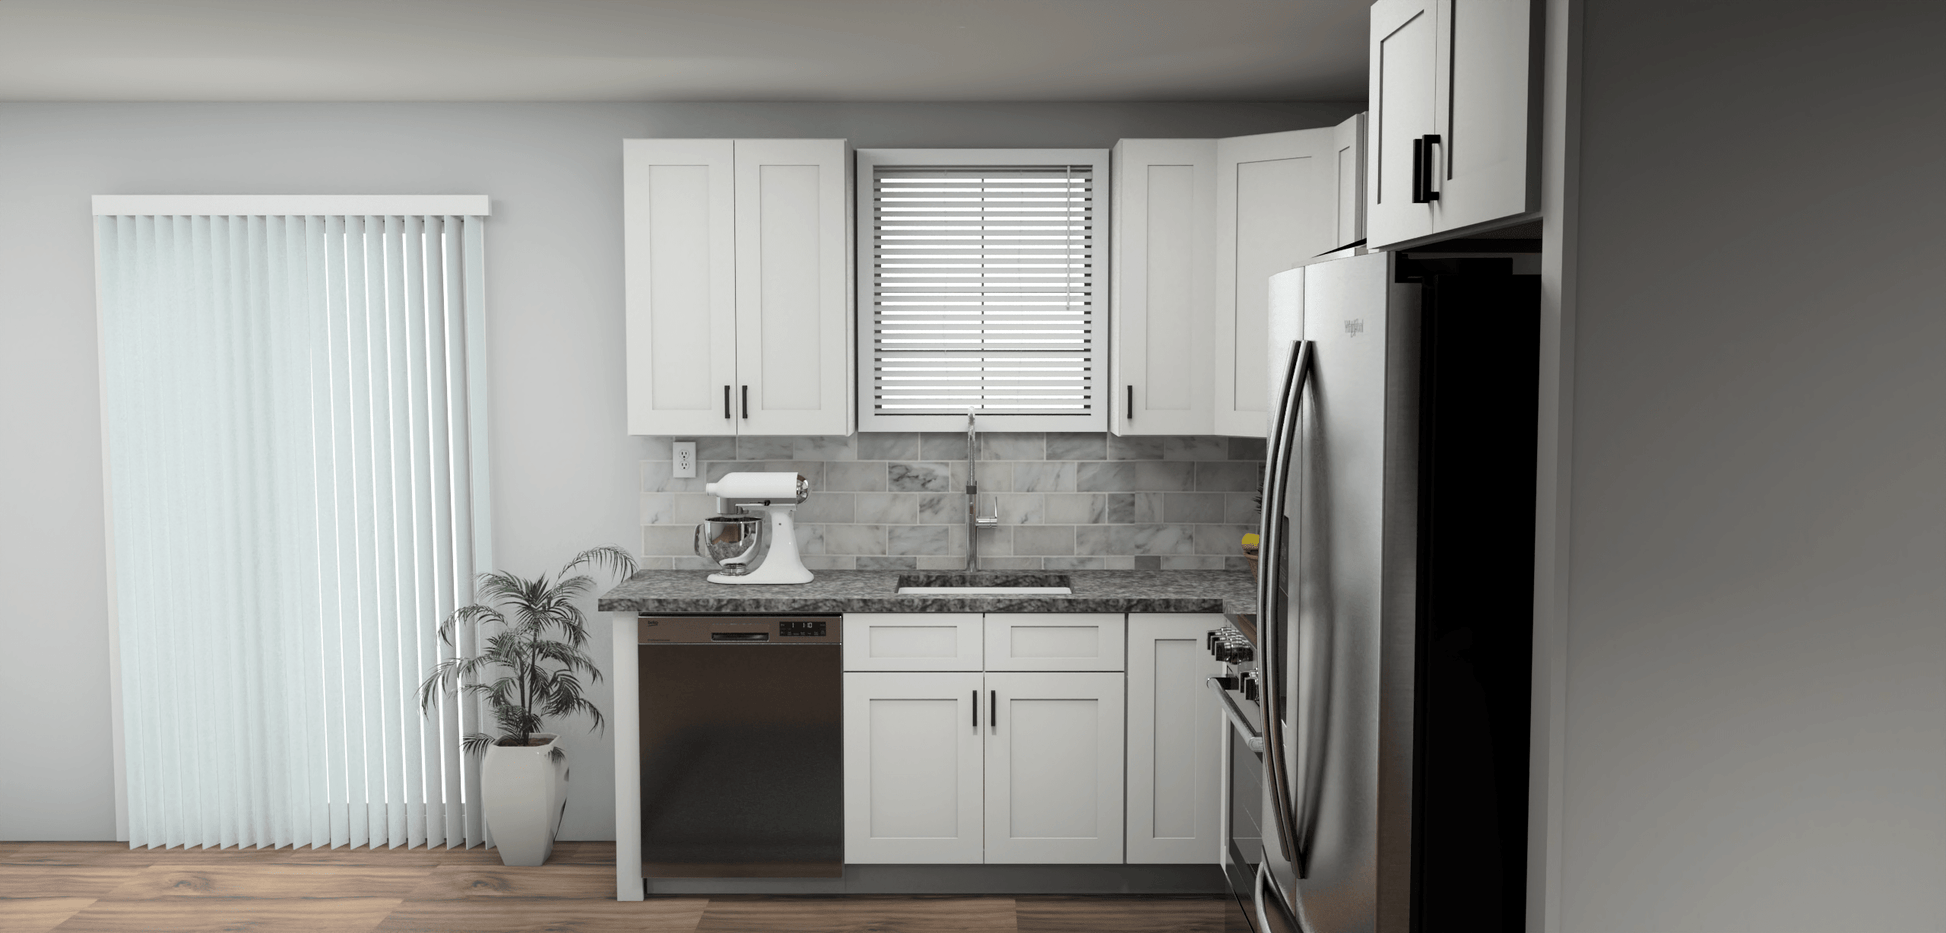 Fabuwood Allure Galaxy Frost 8 x 11 L Shaped Kitchen Side Layout Photo